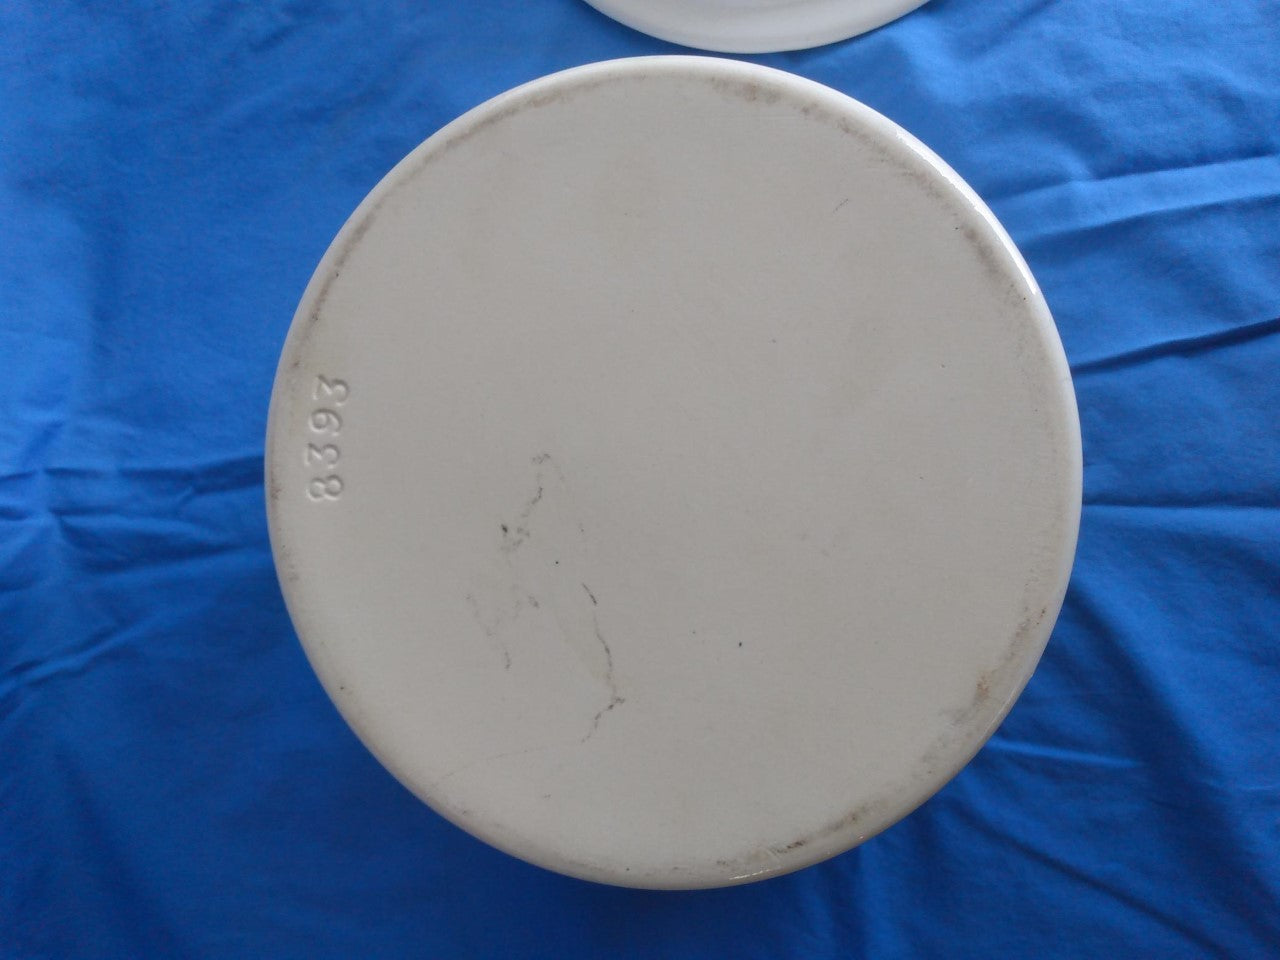 White Ceramic Covered Casserole Dish - Preowned